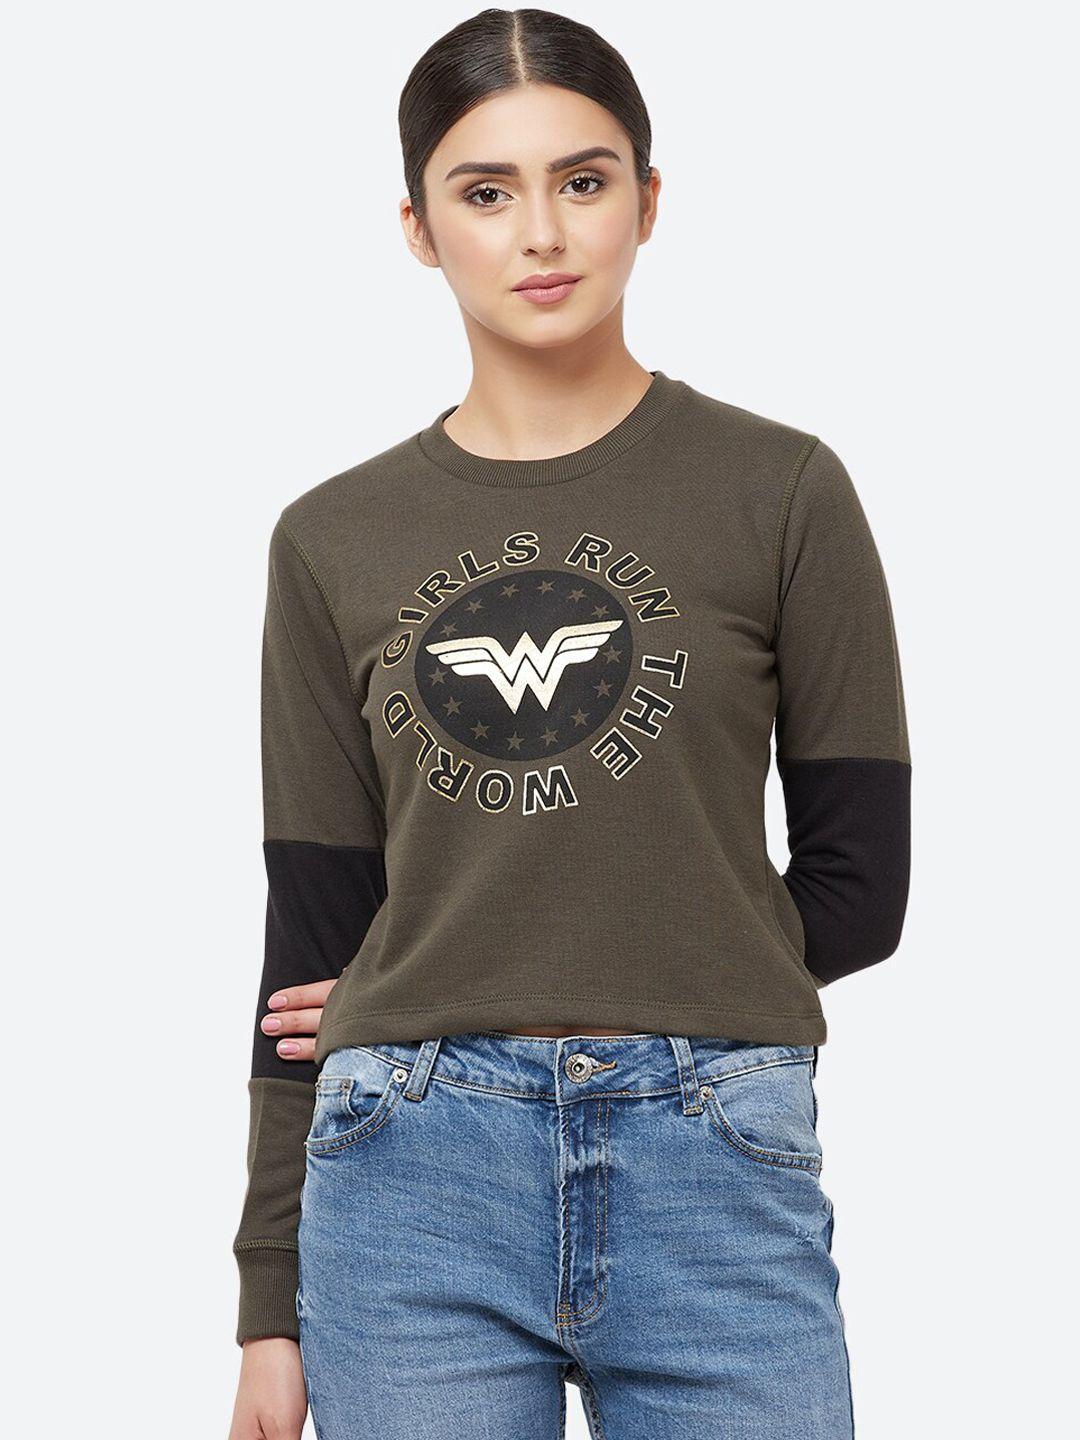 free authority wonder woman print olive sweatshirt for women